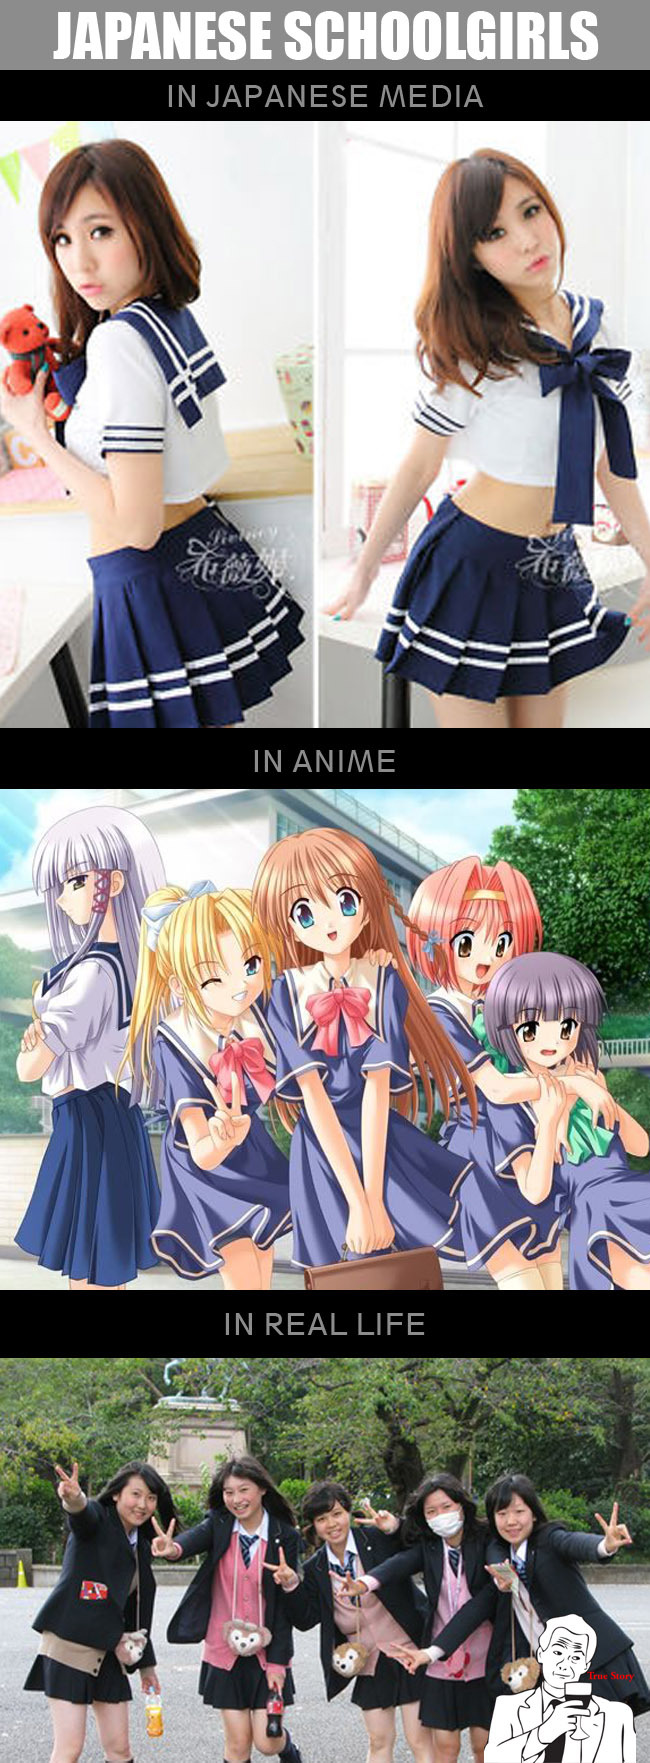 Japanese schoolgirls  - meme